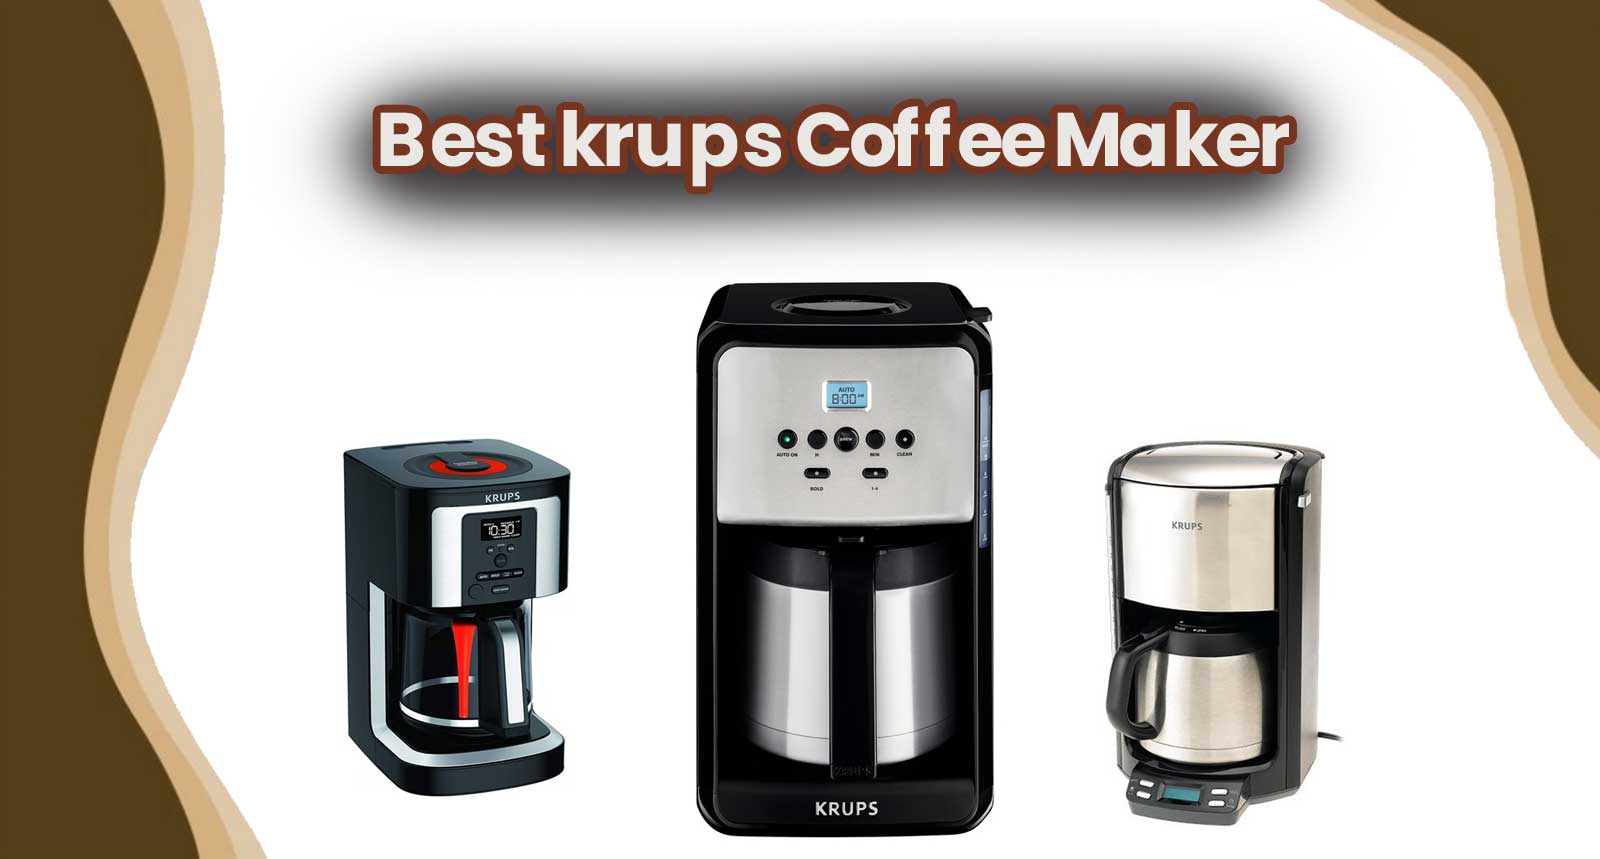 Best krups coffee maker